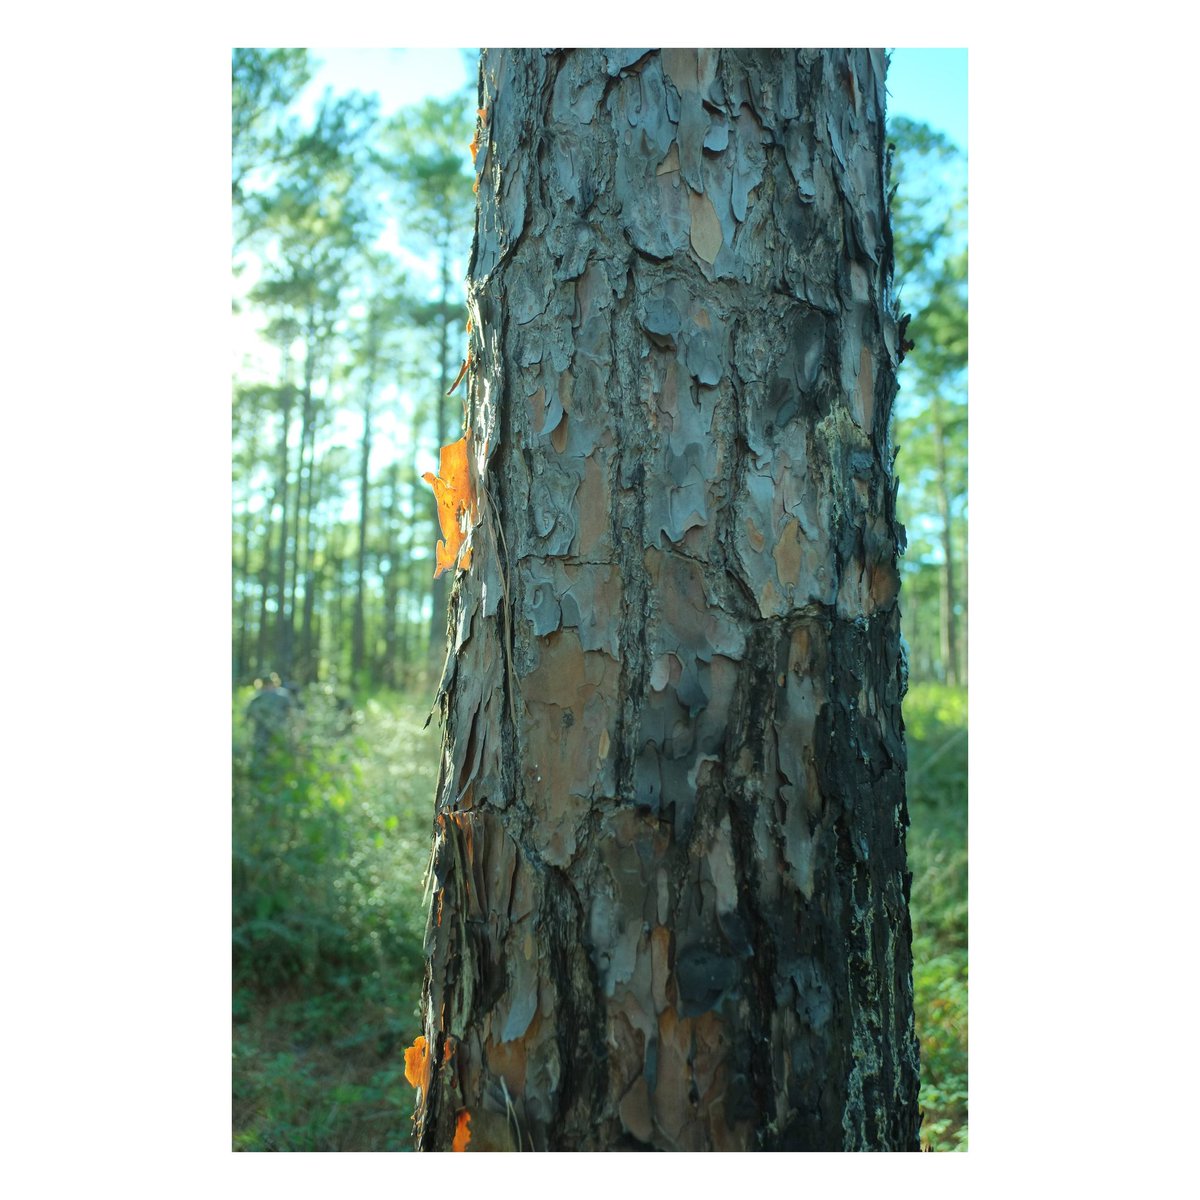 In The Woods

--------------------

#fujifilm #fujifilm_us #fujifilmxseries #fujifilmxpro1 #photography #texas #woods #nature #earth #plants #outdoors #tree #trees #forest #hiking #trail #getoutside